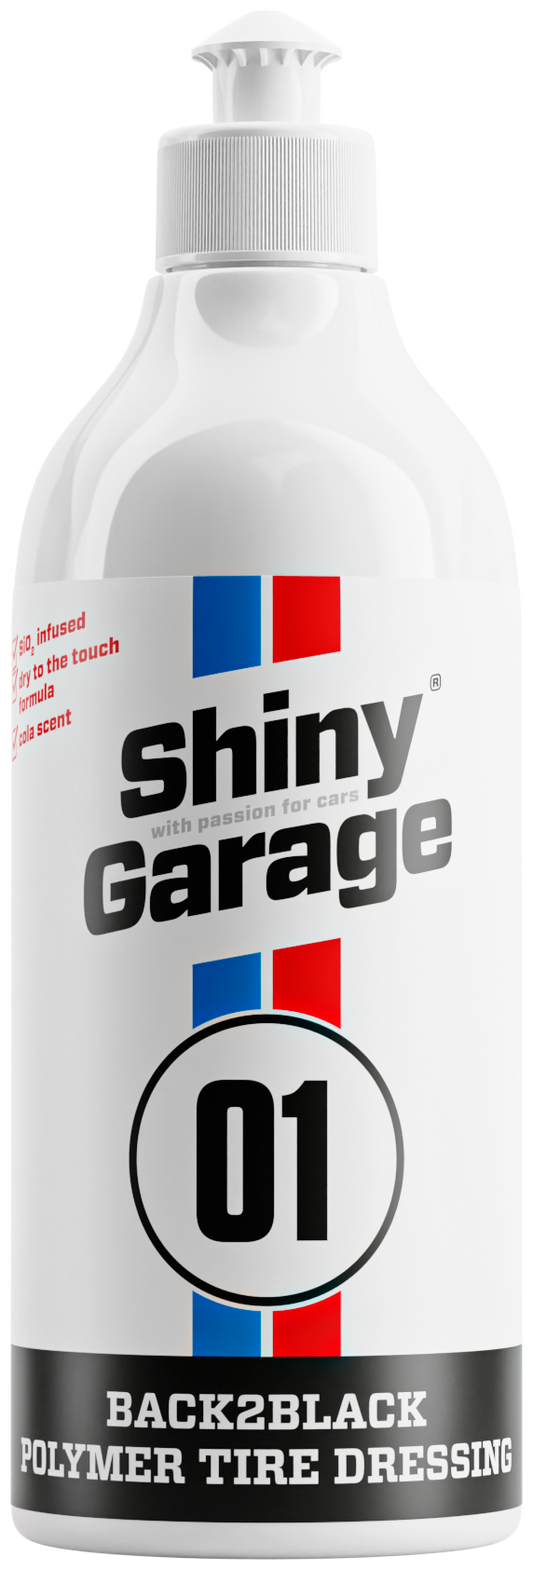 Shiny Garage Back2Black